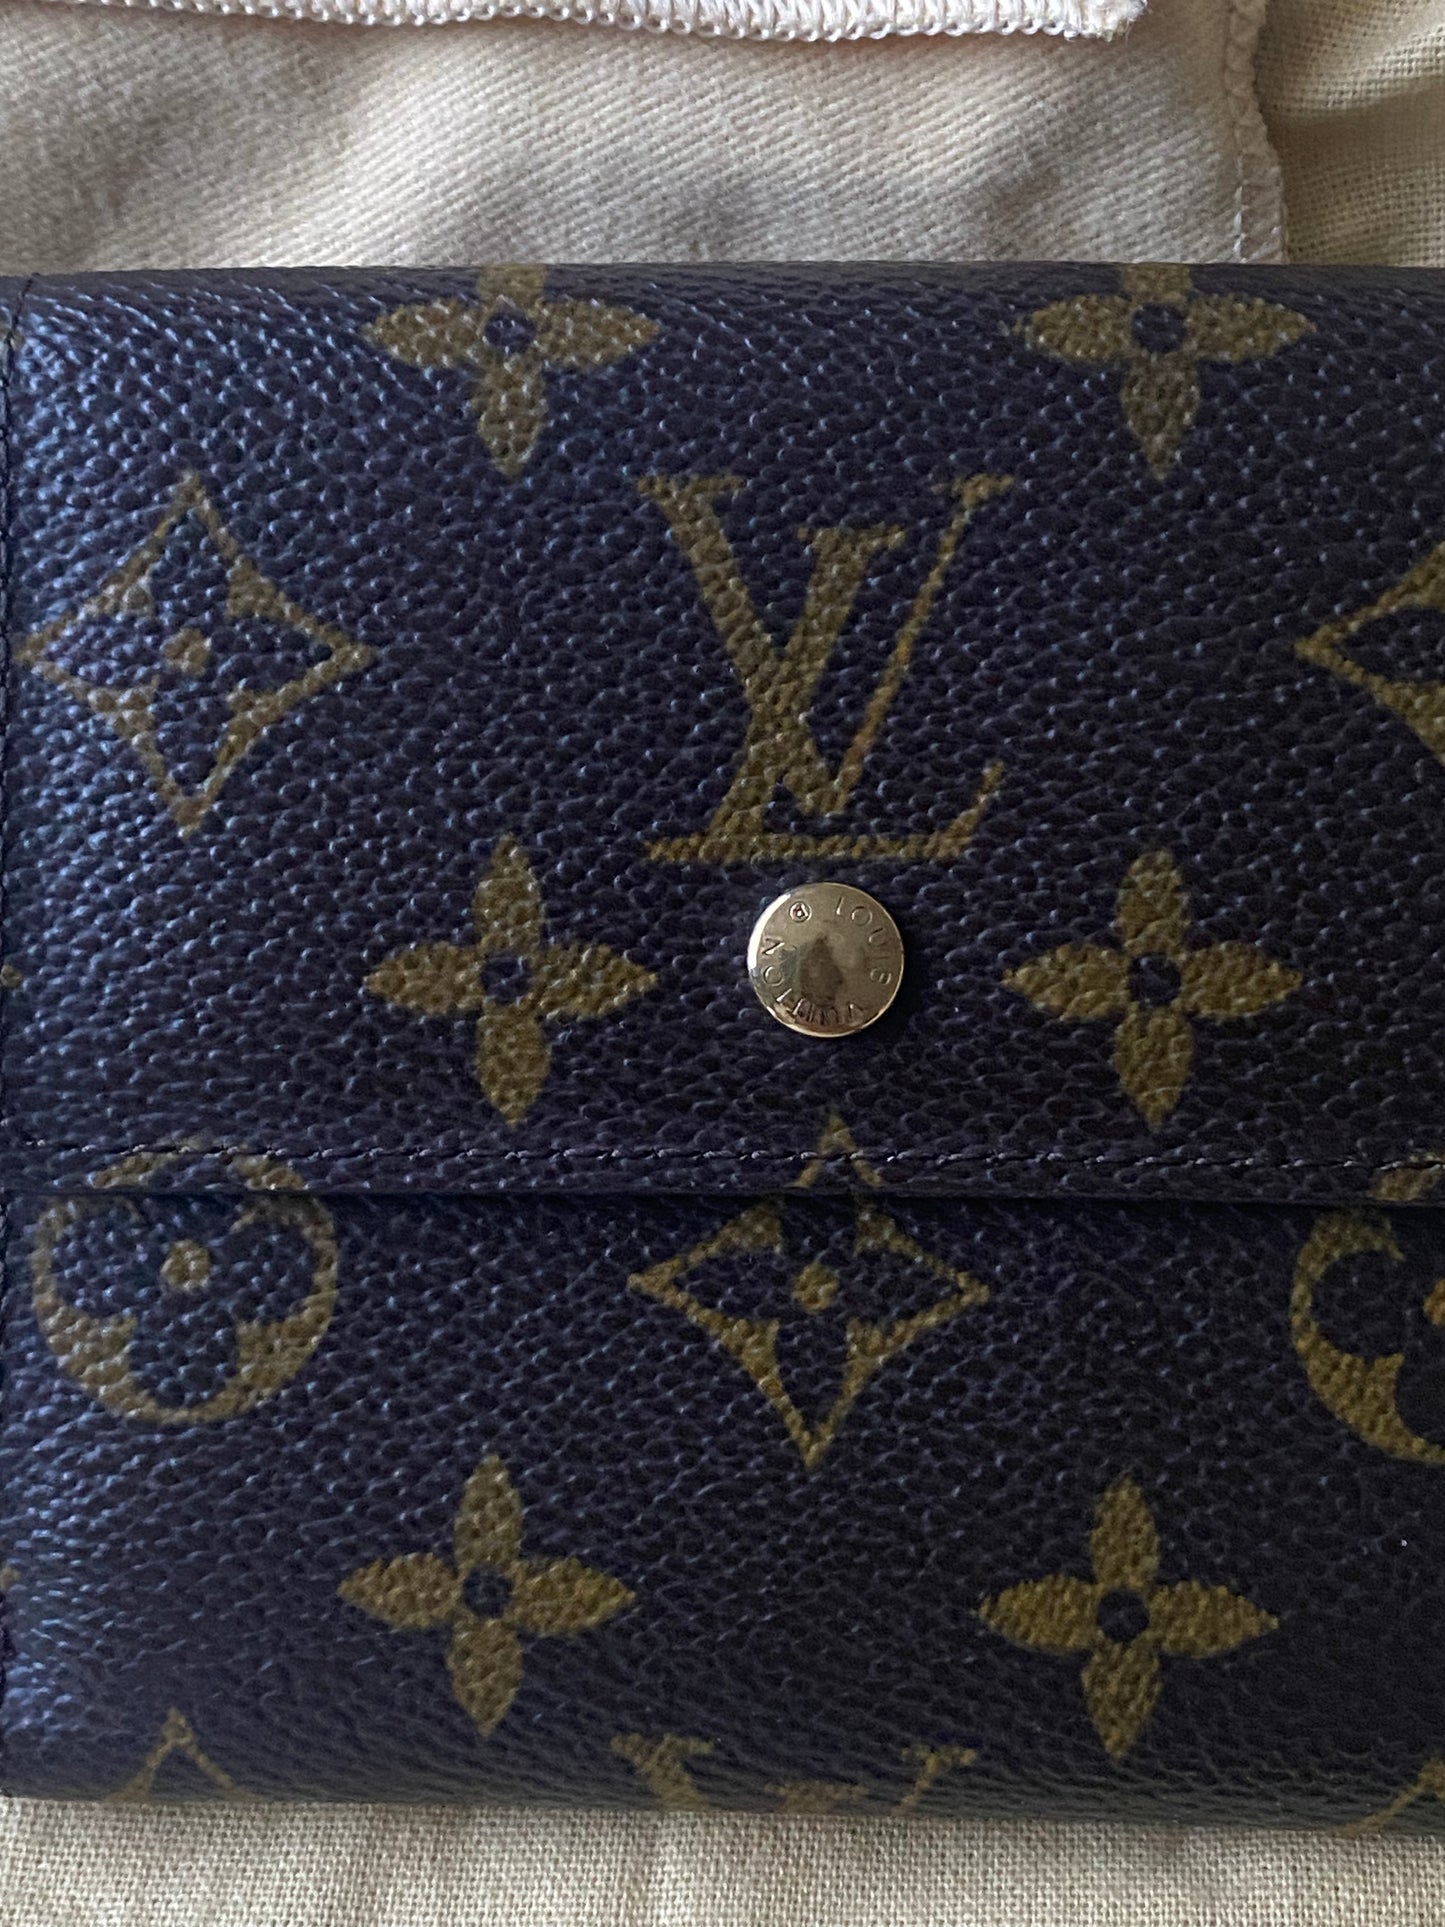 Vintage Bag: Authentic Louis Vuitton Wallet and Round Coin Purse